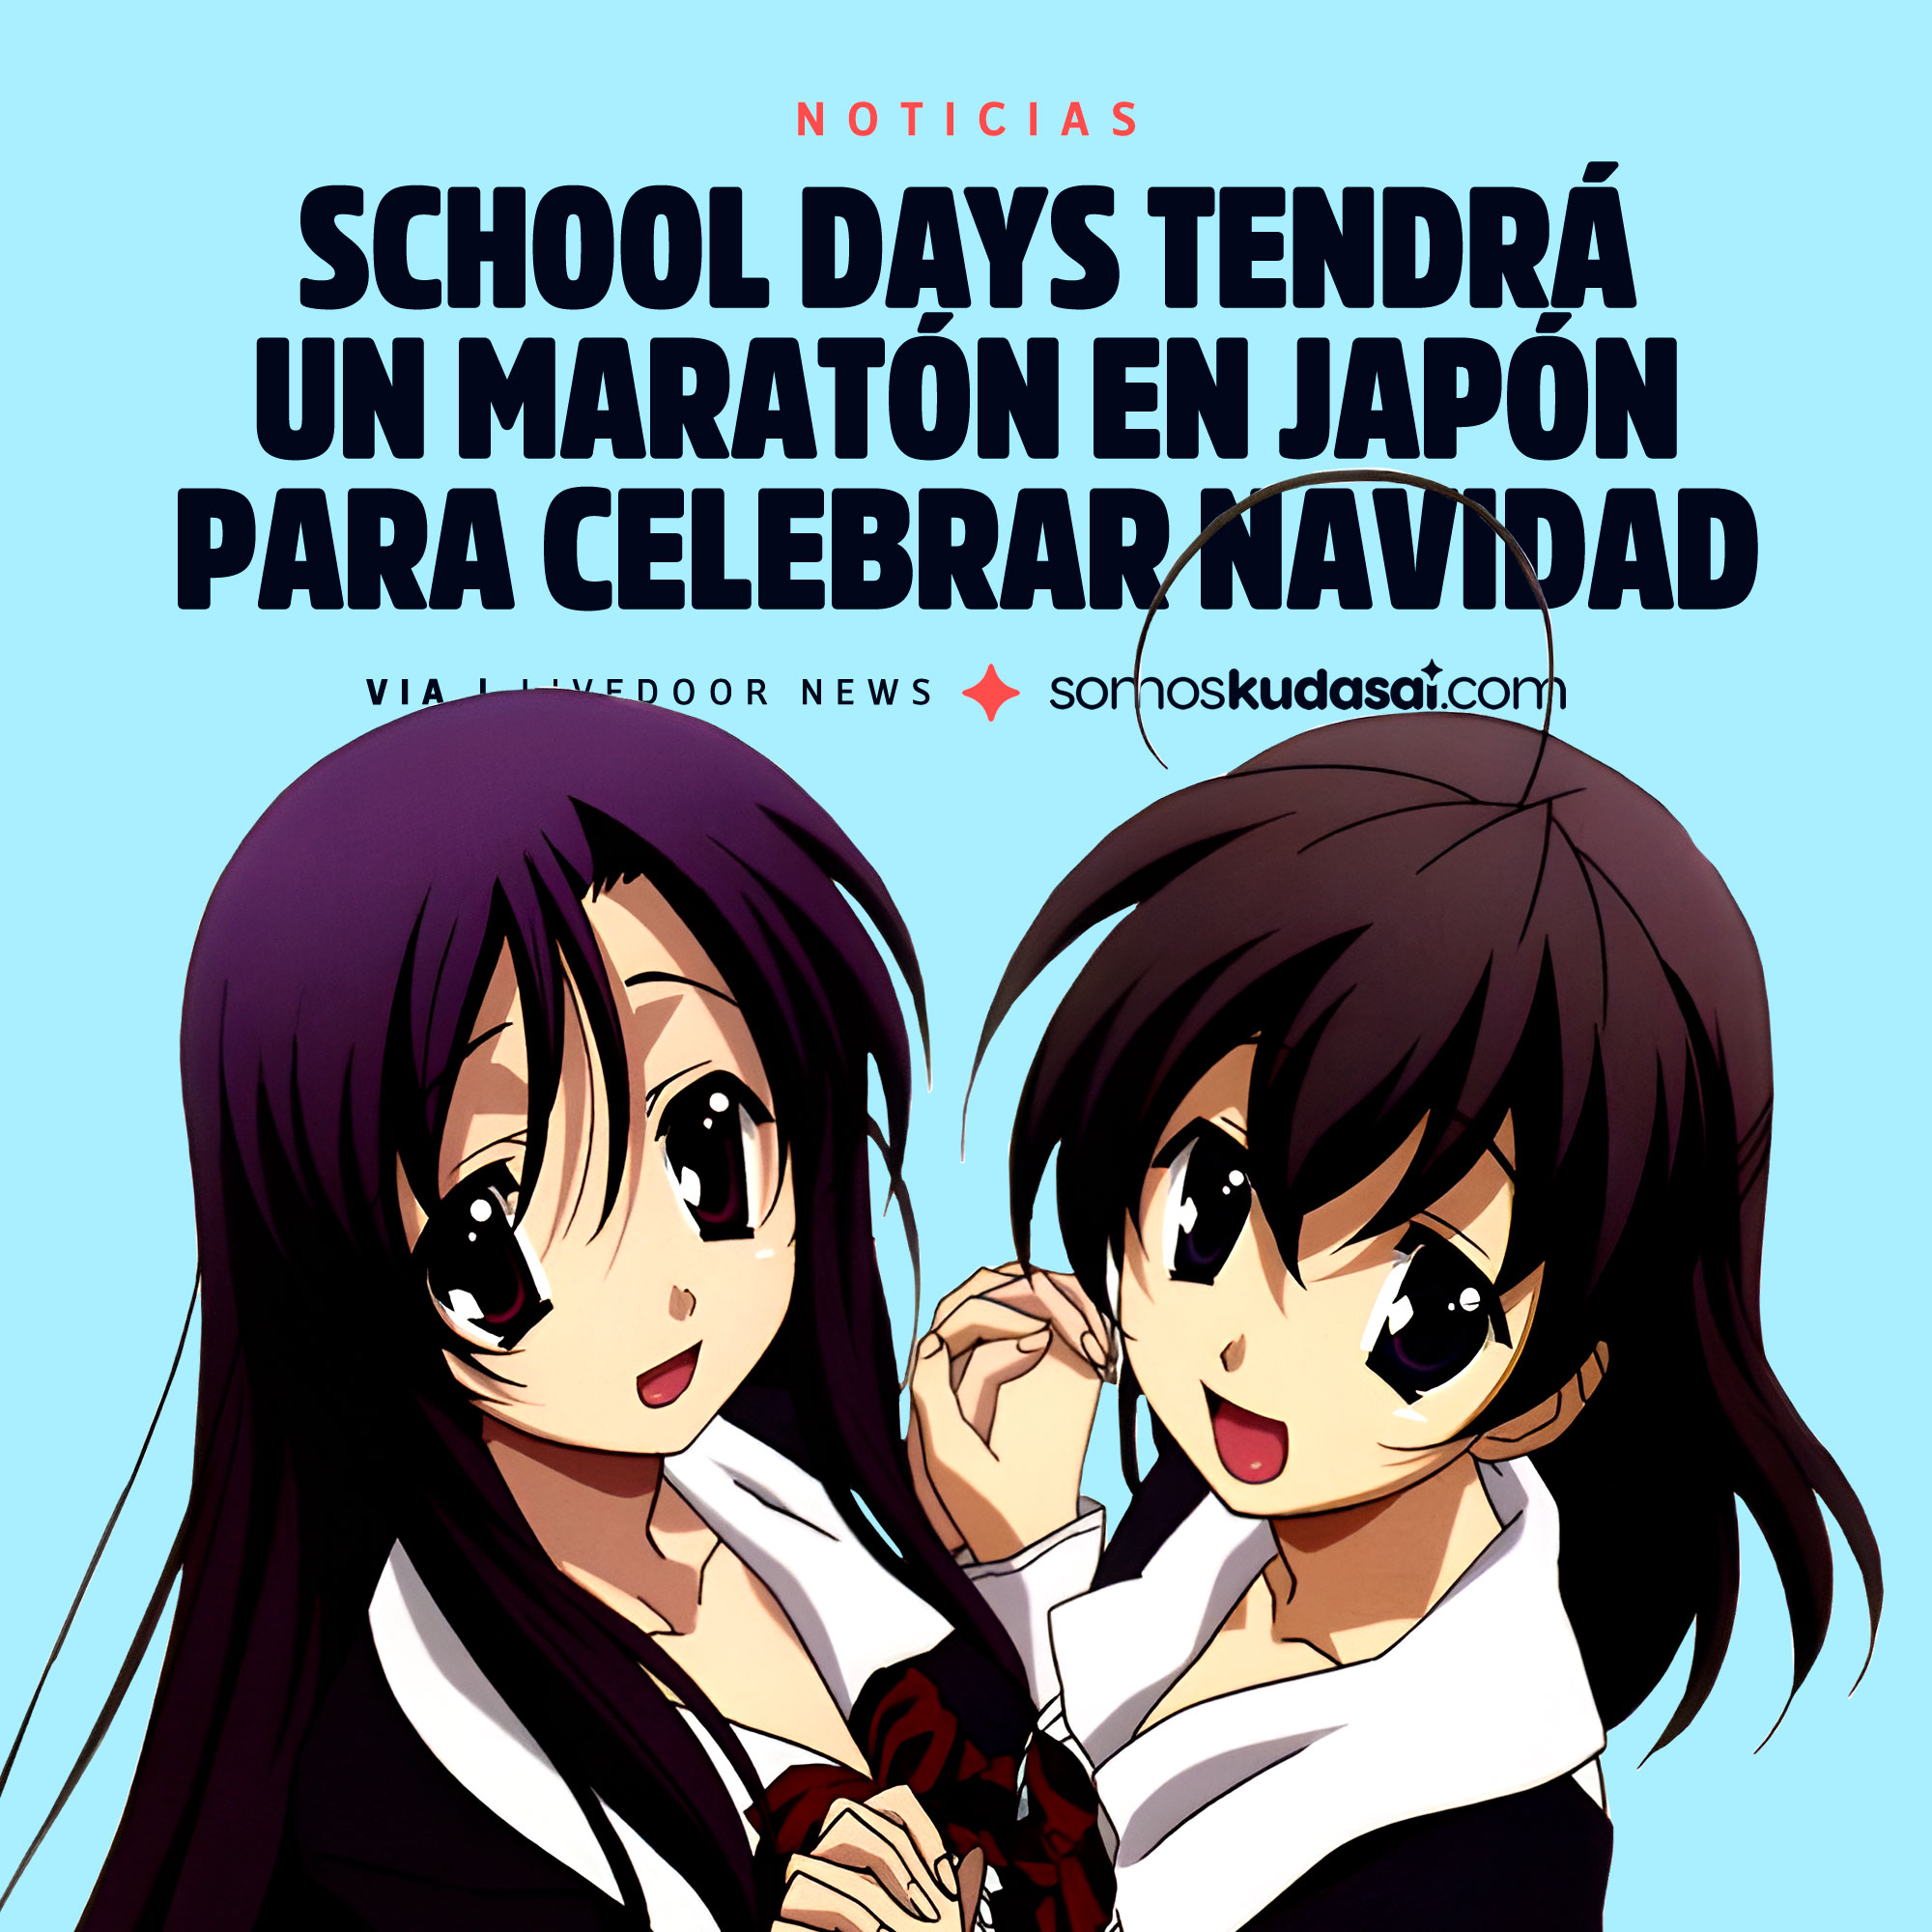 Shuumatsu no harem, capítulo 10 online sub español: fecha y hora de estreno  del anime, Ecchi, manga, mx, jp, Animes